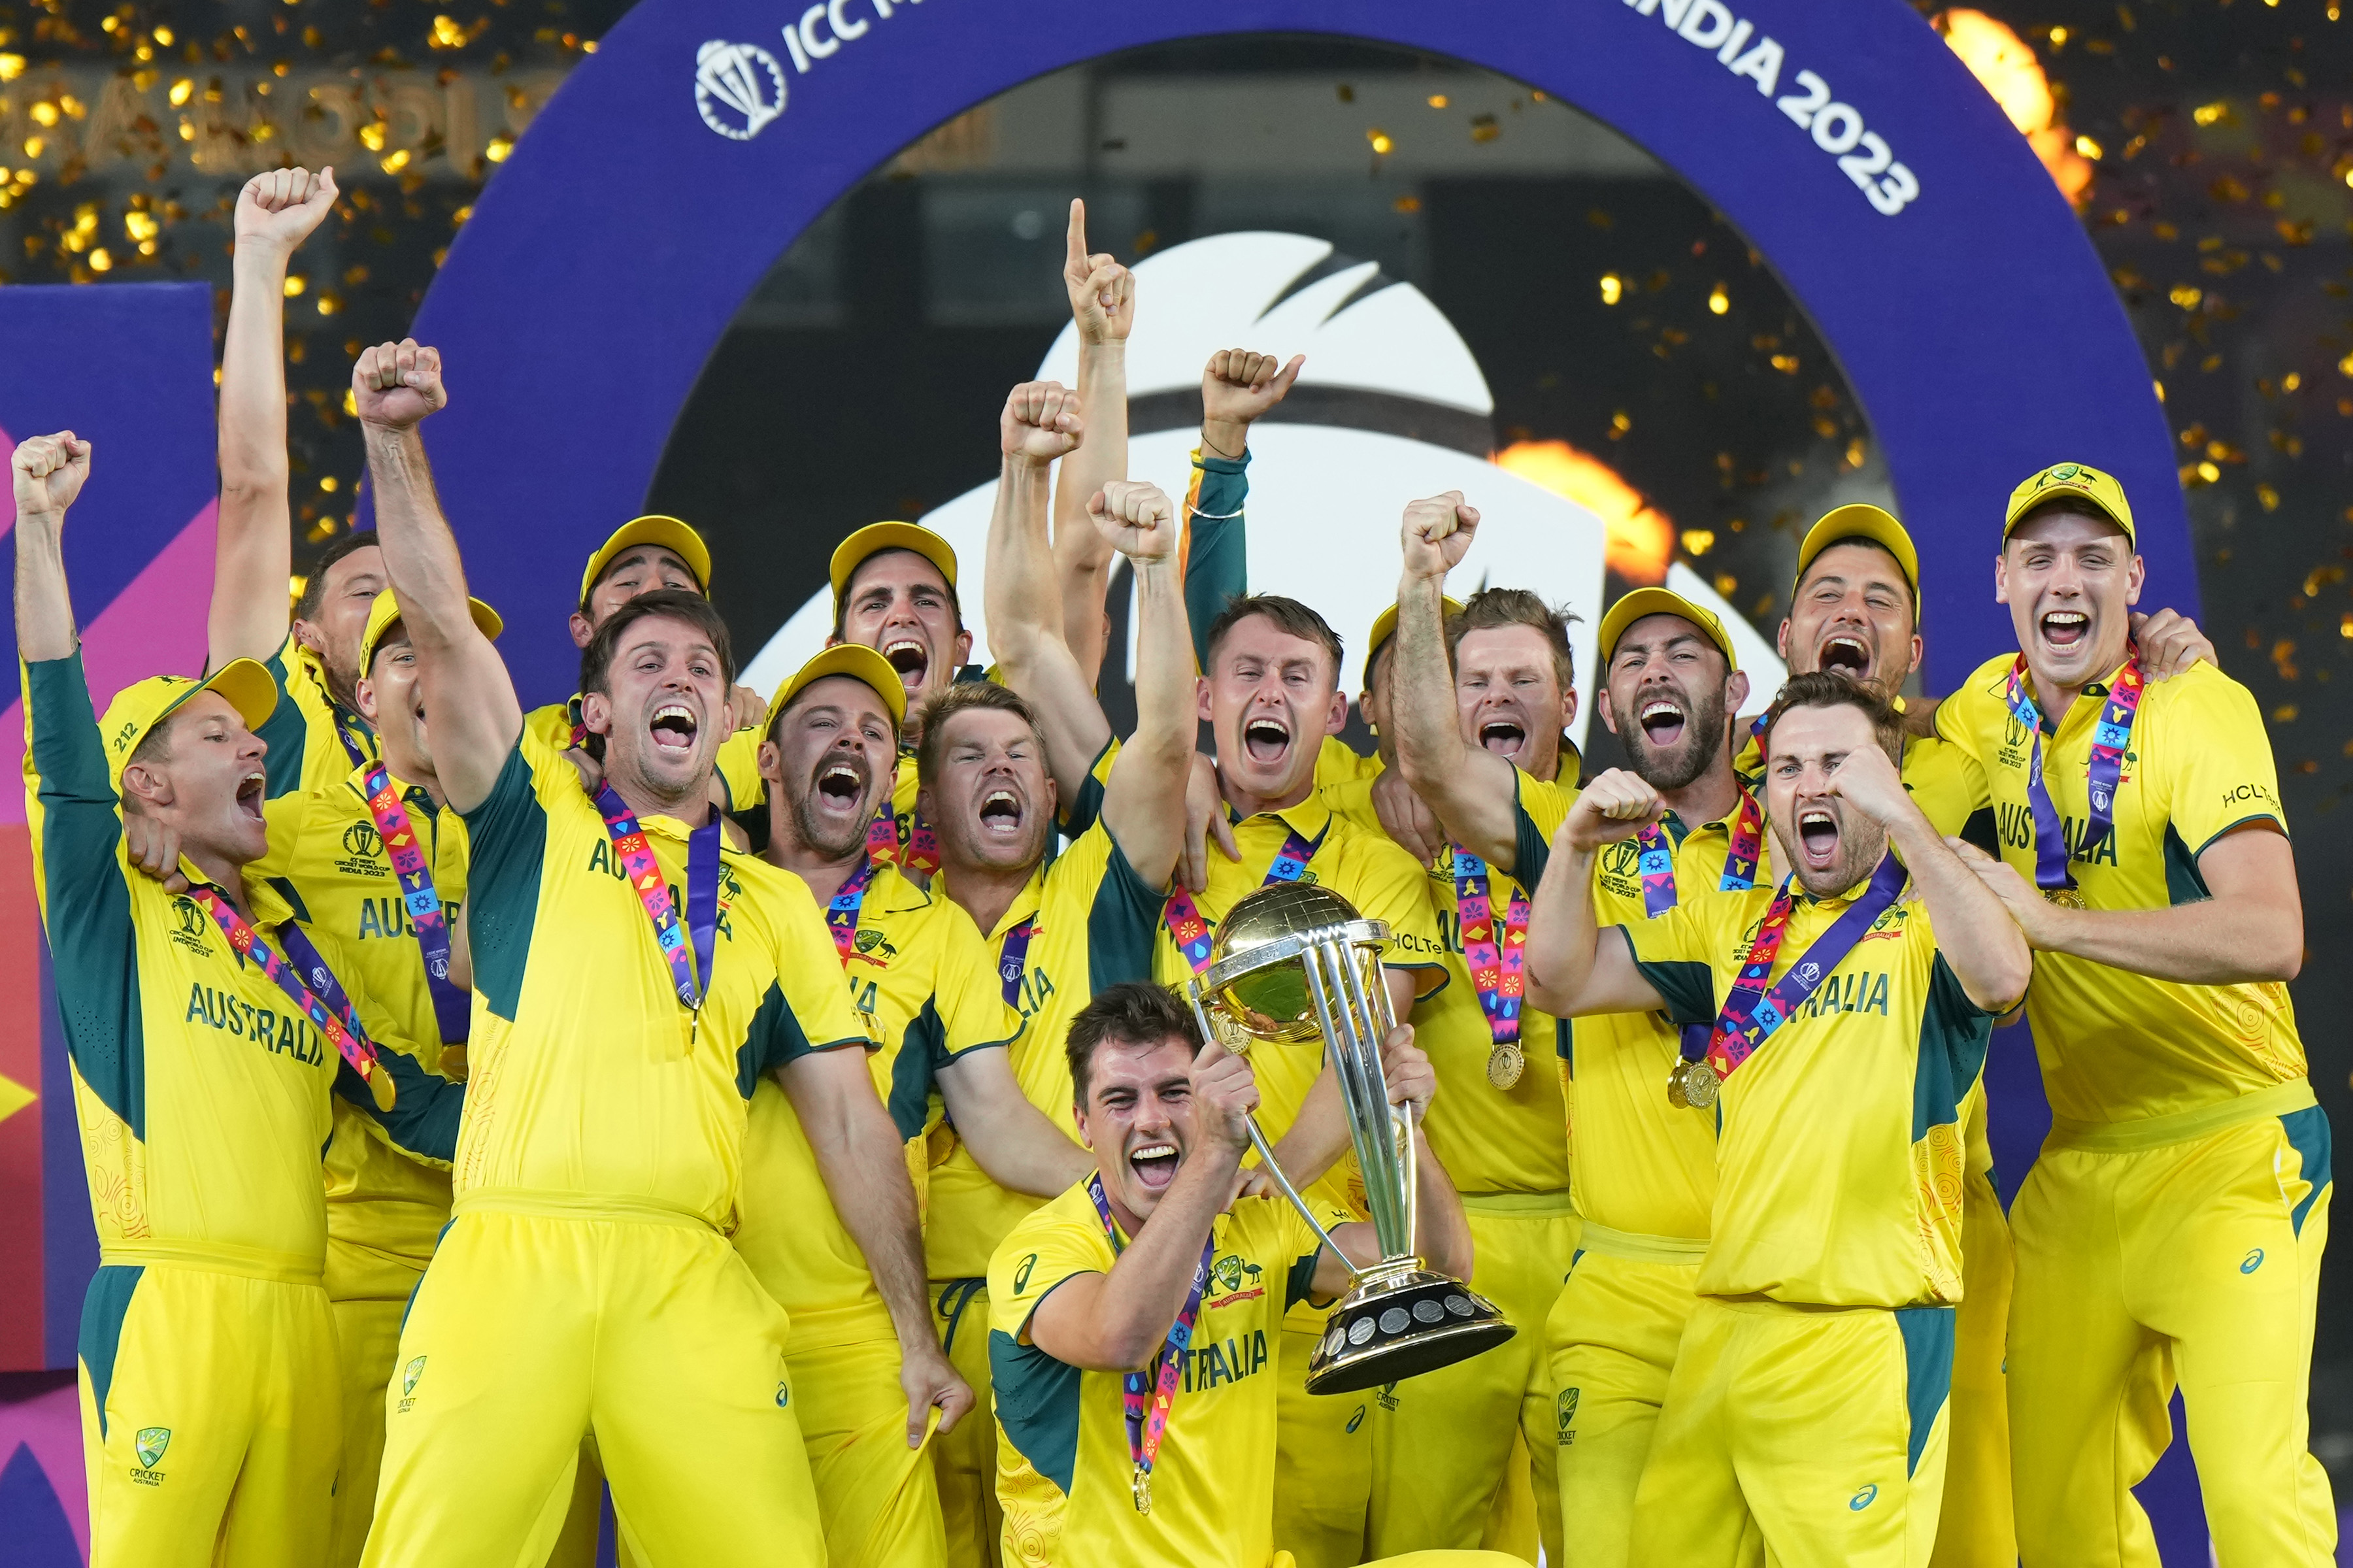 ODI cricket World Champions Australia